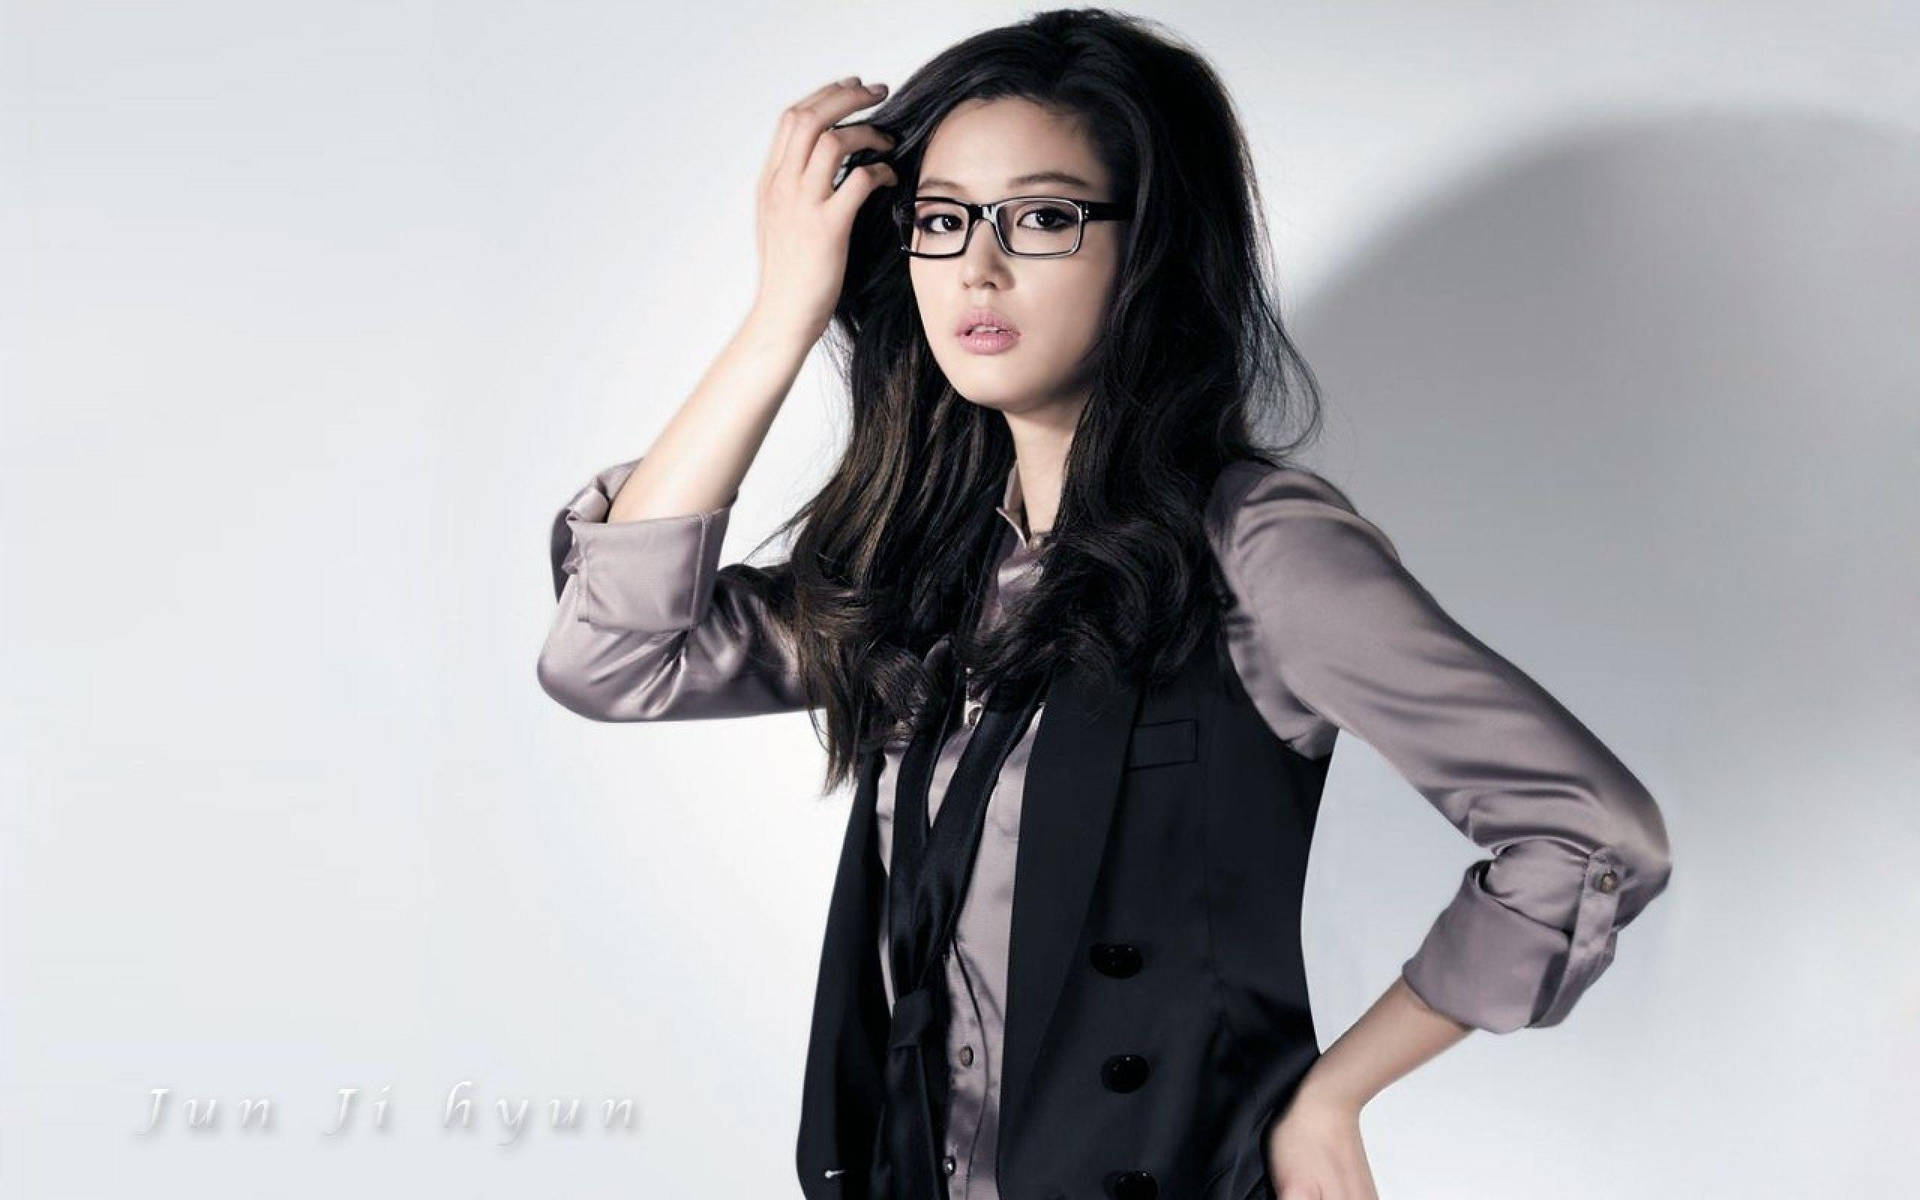 International Winning Actress Jun Ji Hyun